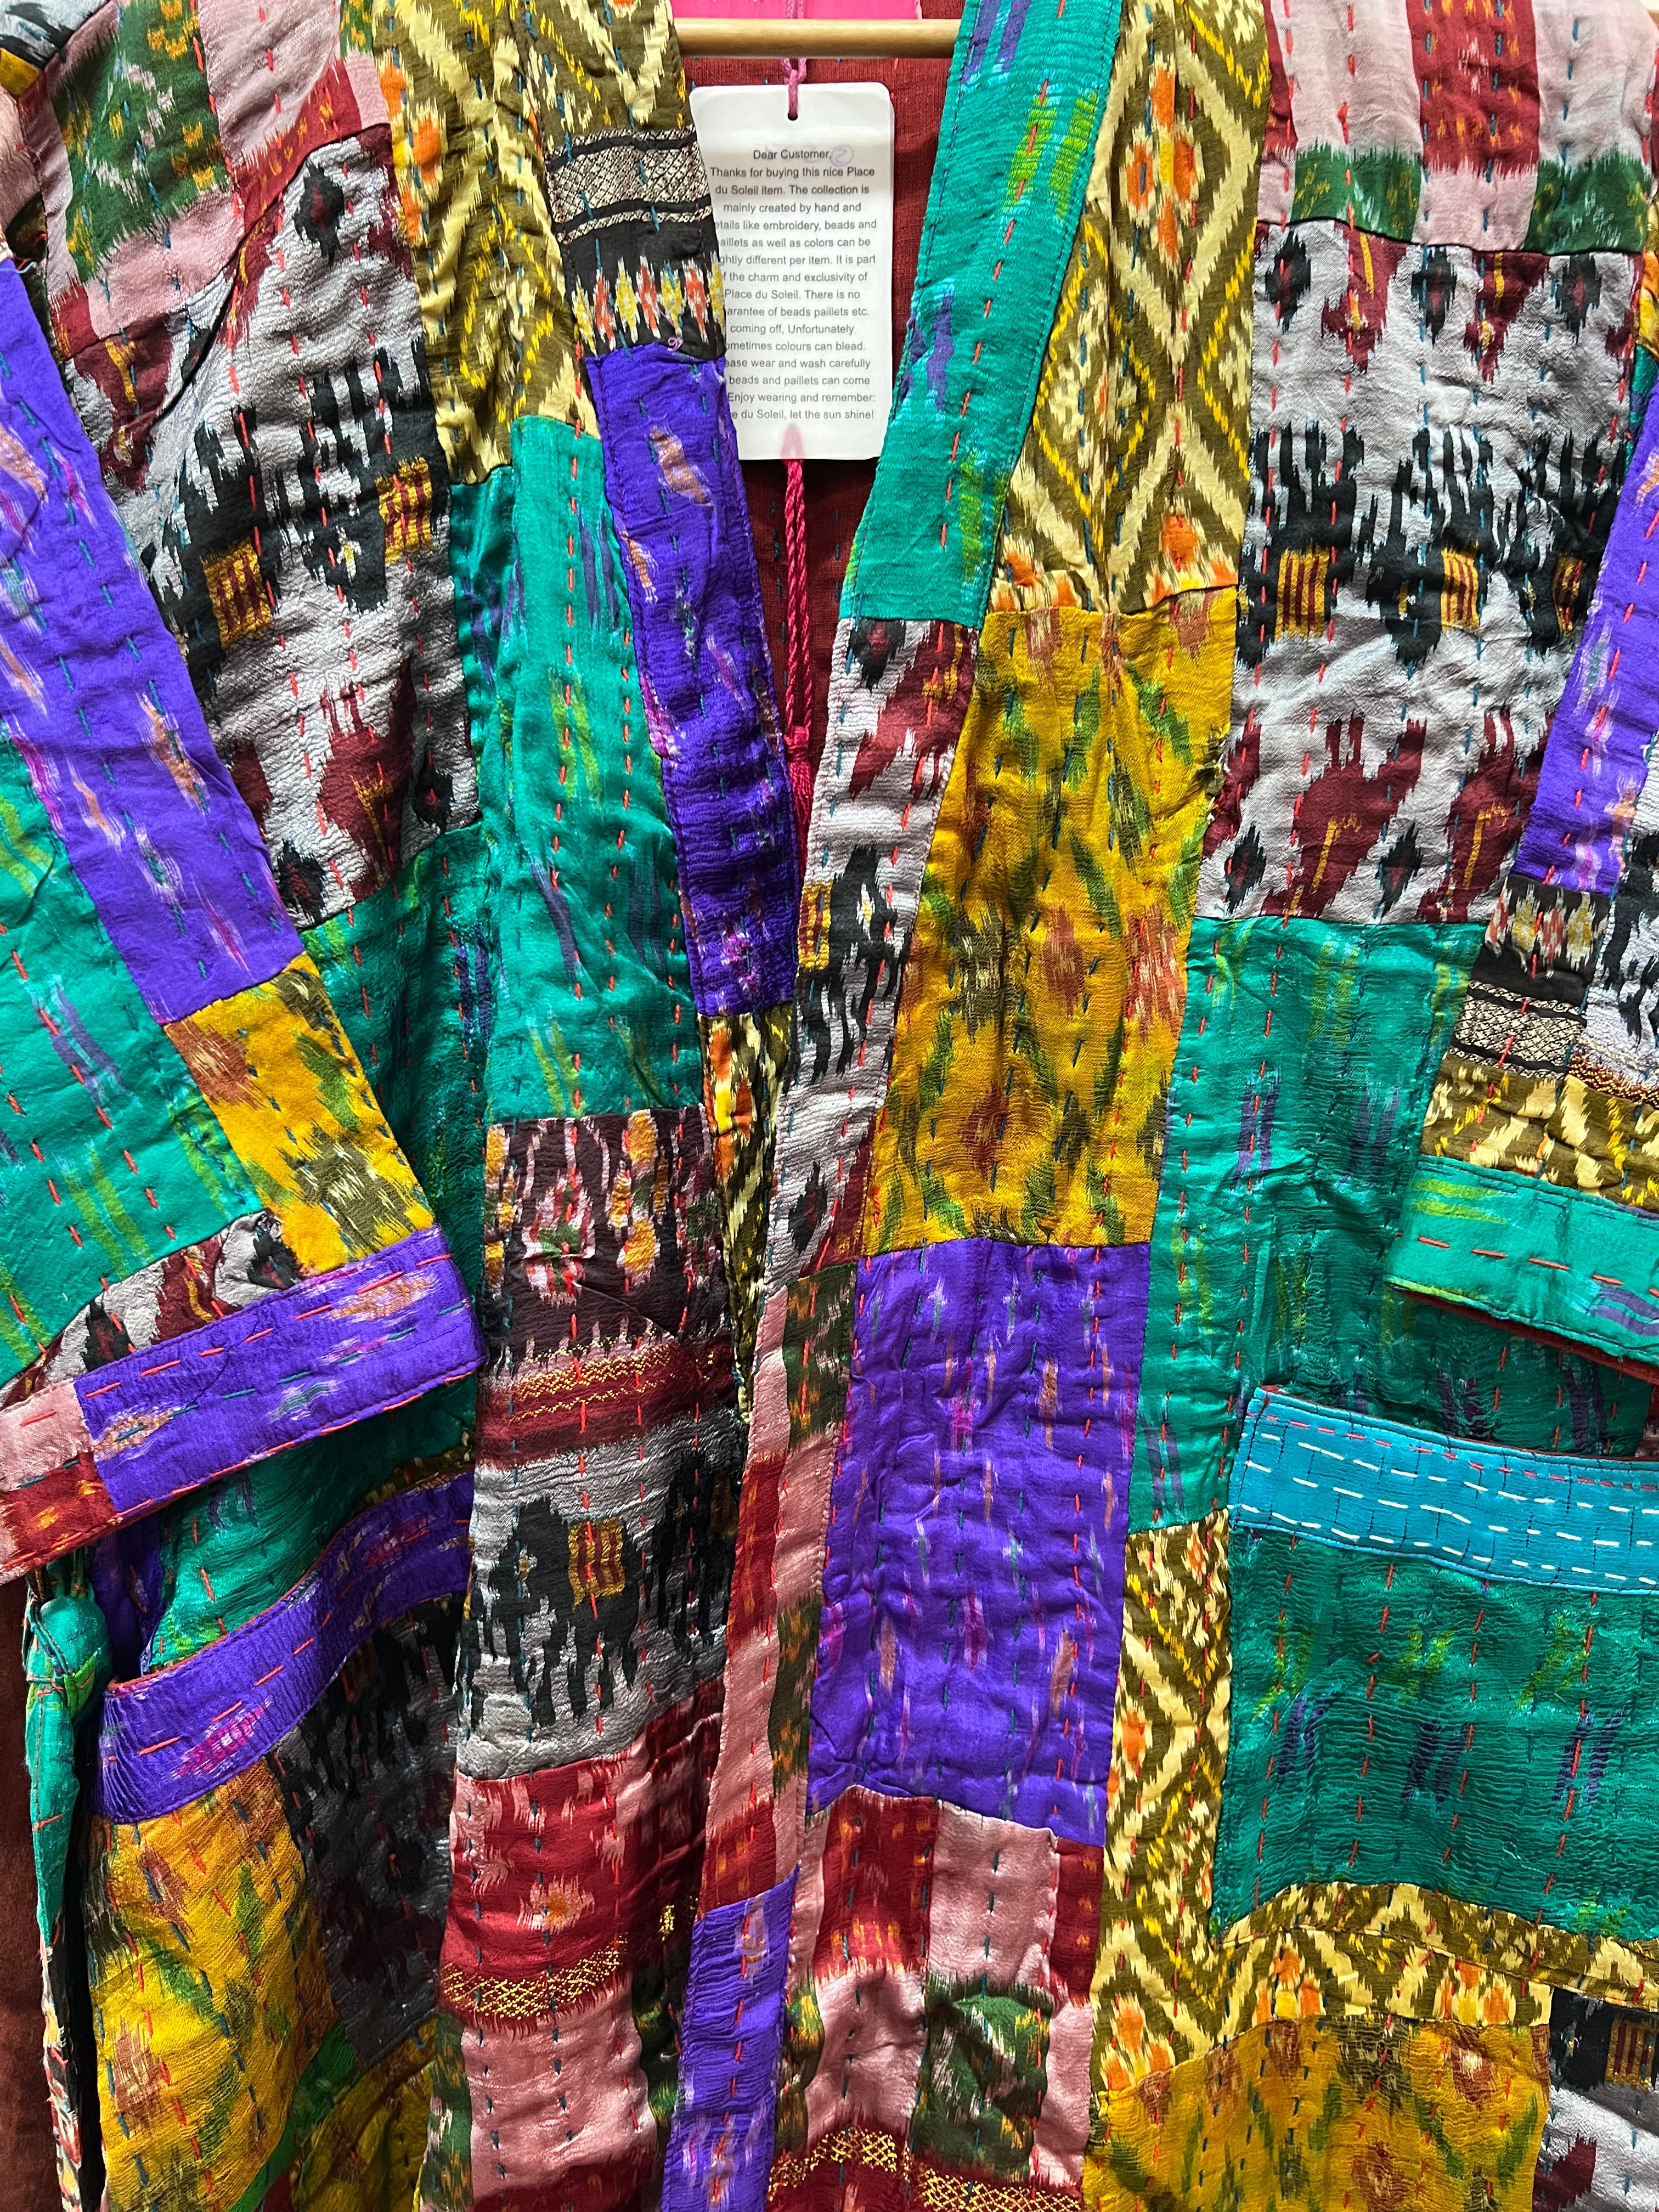 Multi Colour Kimono 2